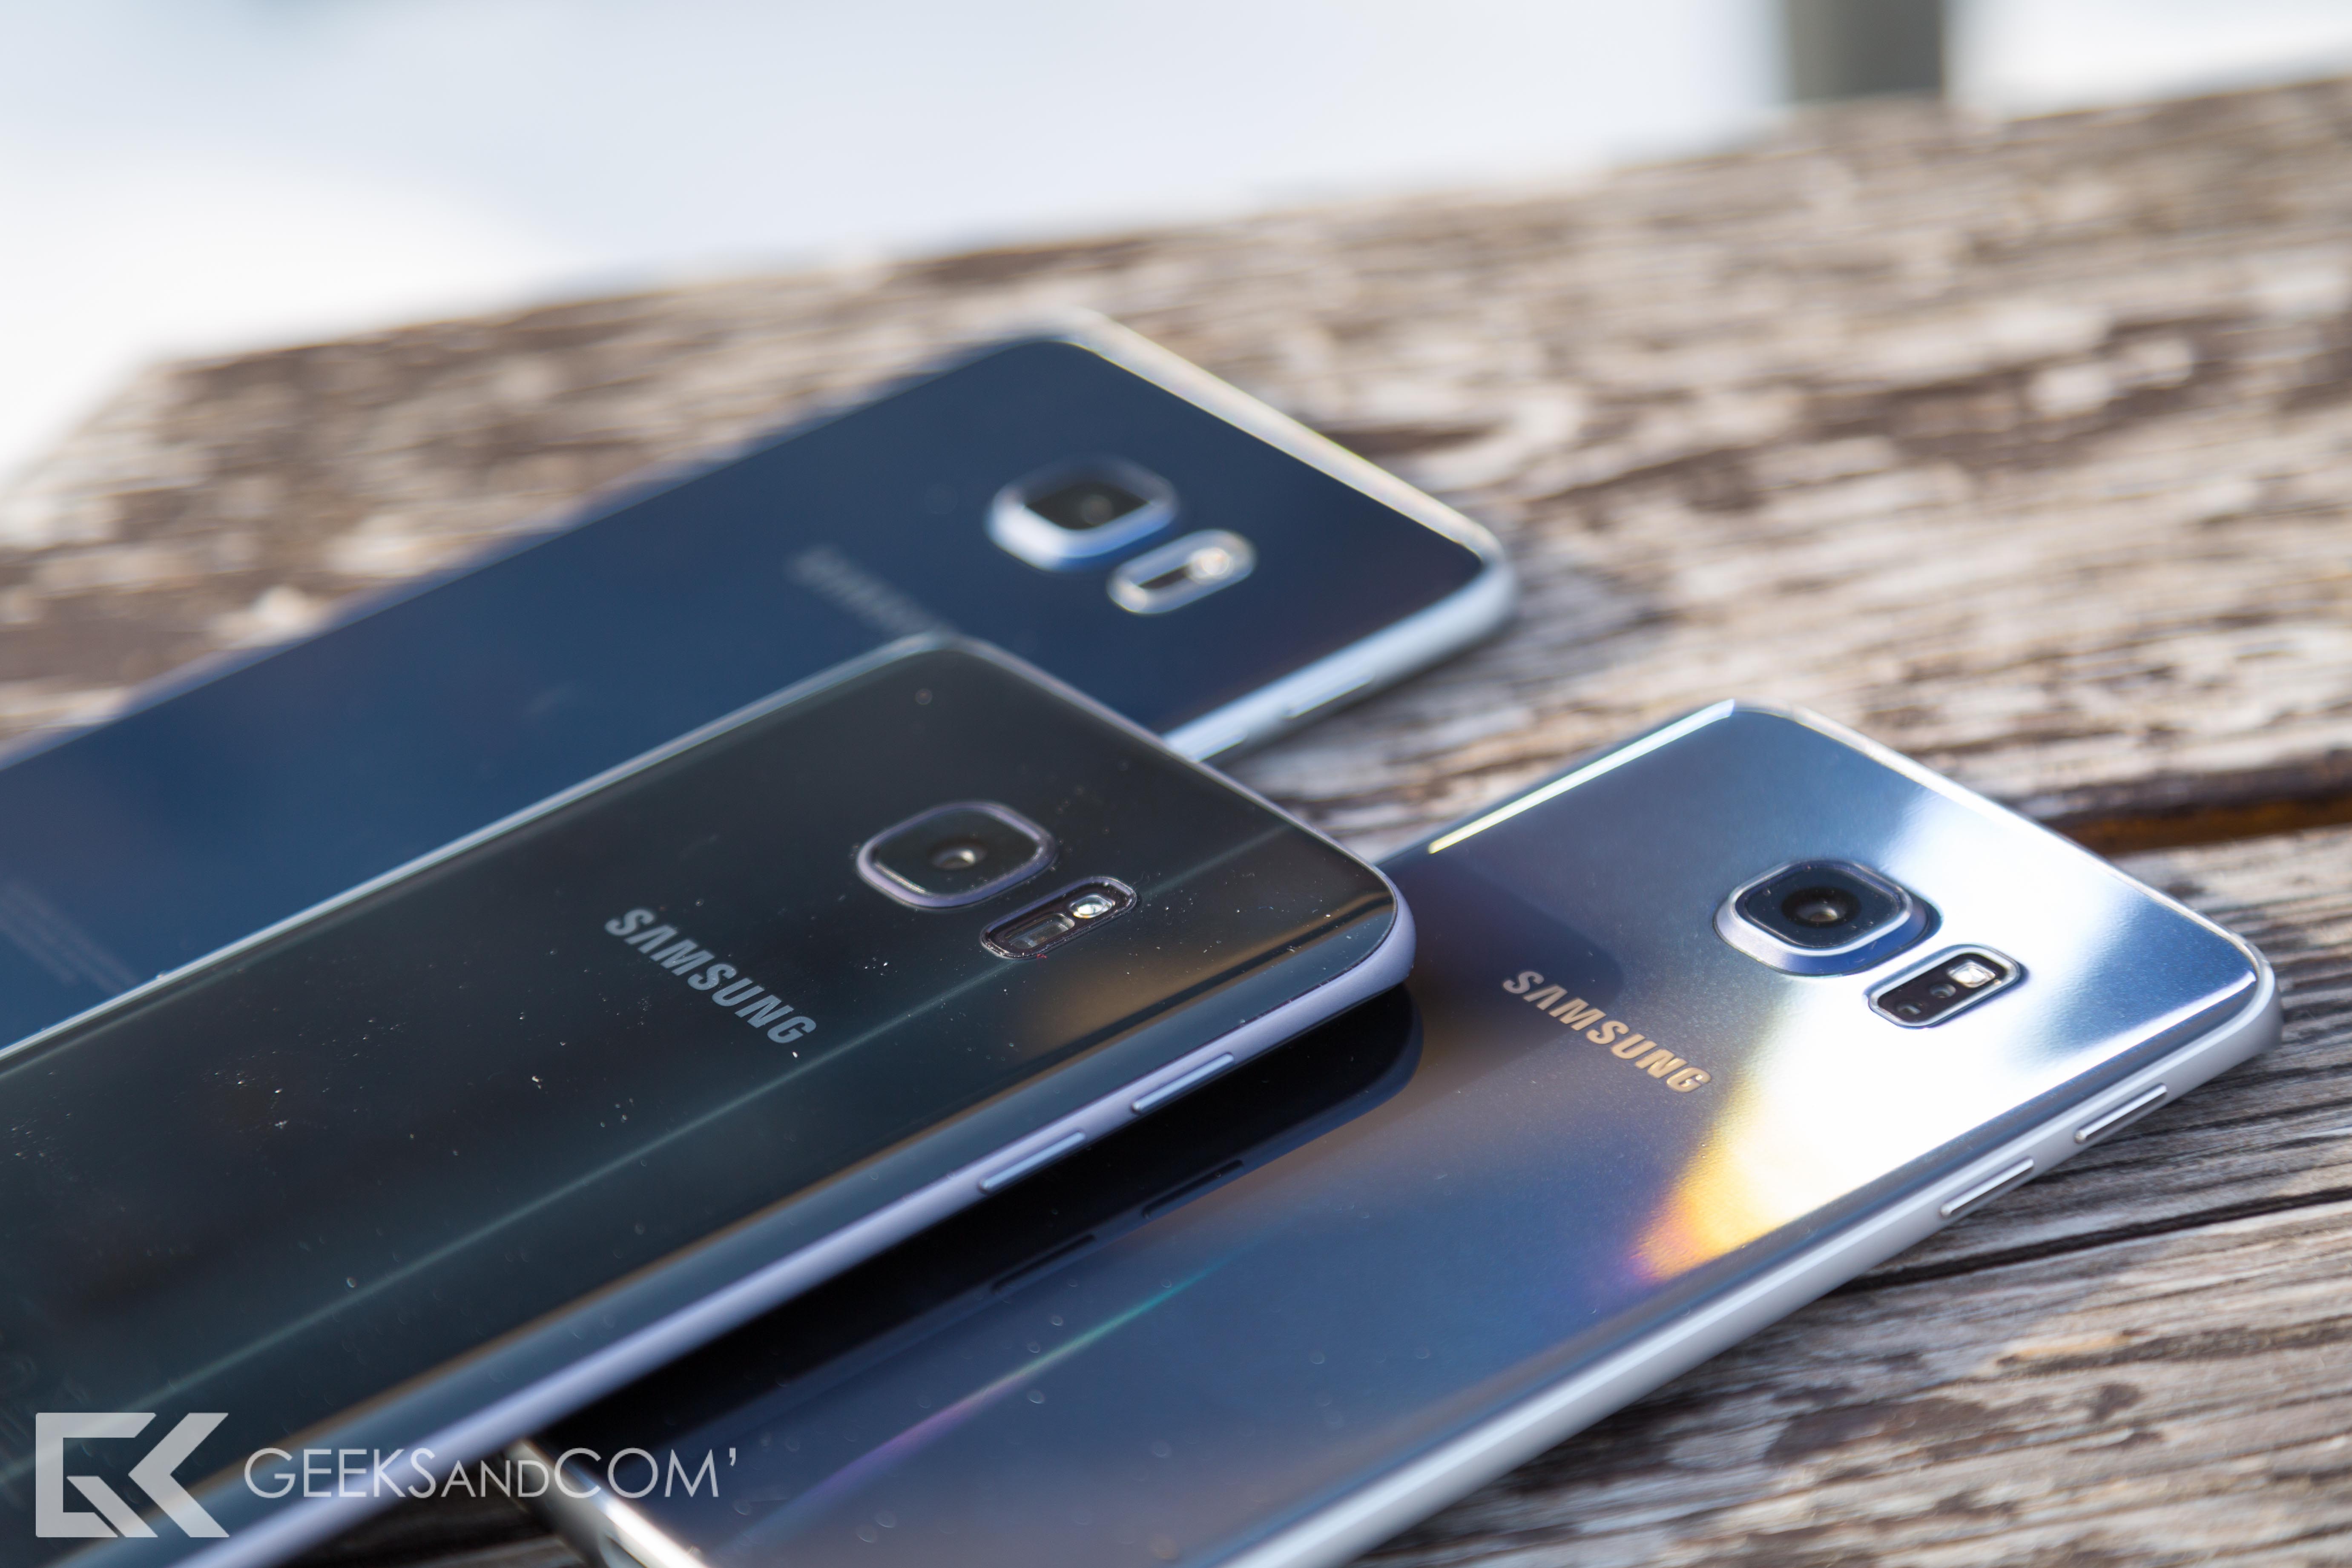 Samsung Galaxy S6 edge vs S7 edge vs S6 edge plus - Test Geeks and Com -4